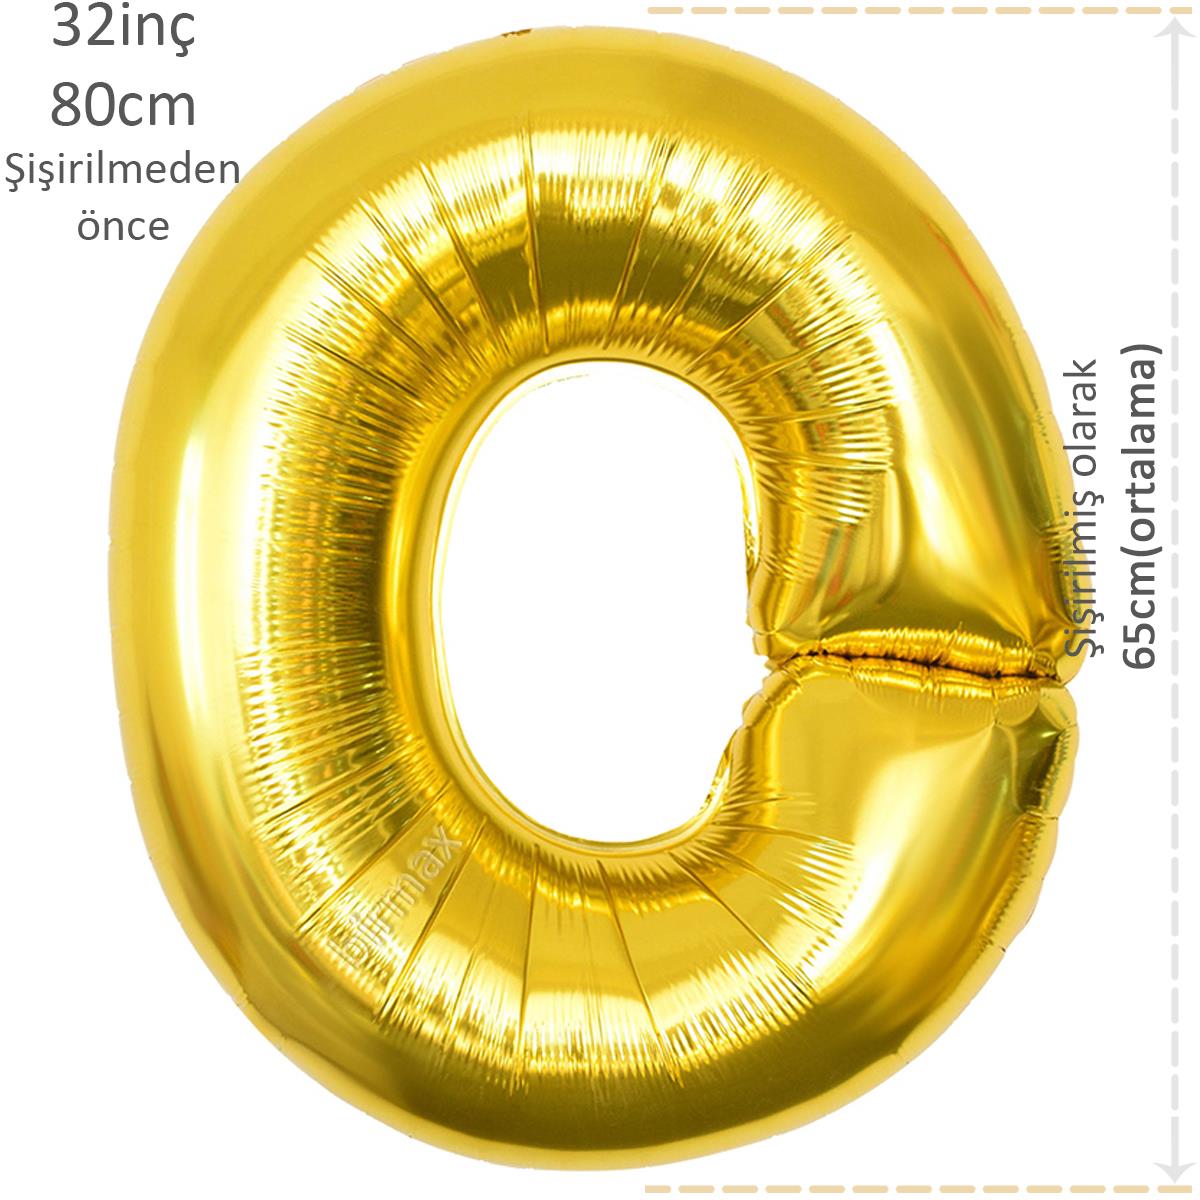 Harf Folyo Balon Altın Gold O Harfi 32inç 80cm